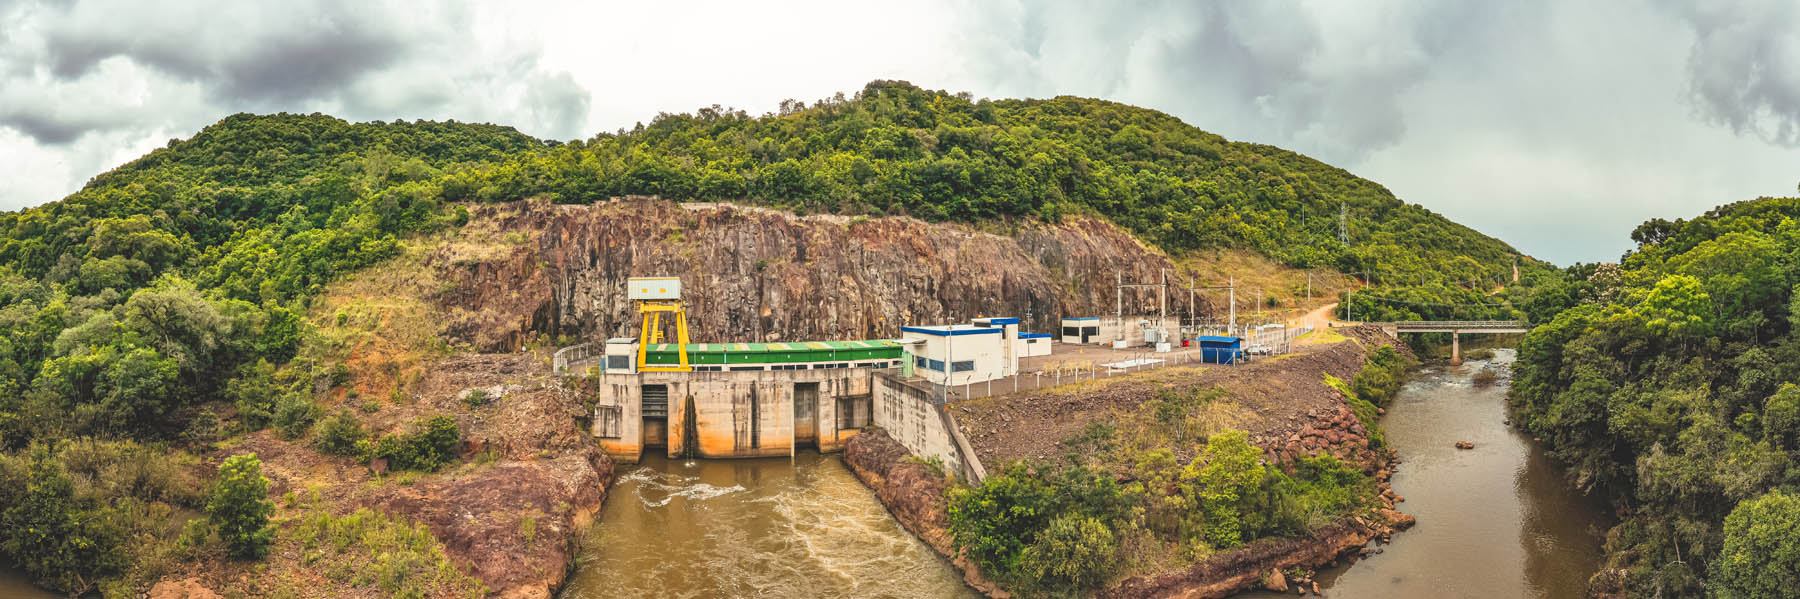 Hidrelétrica Moinho na Região Sul do Brasil 